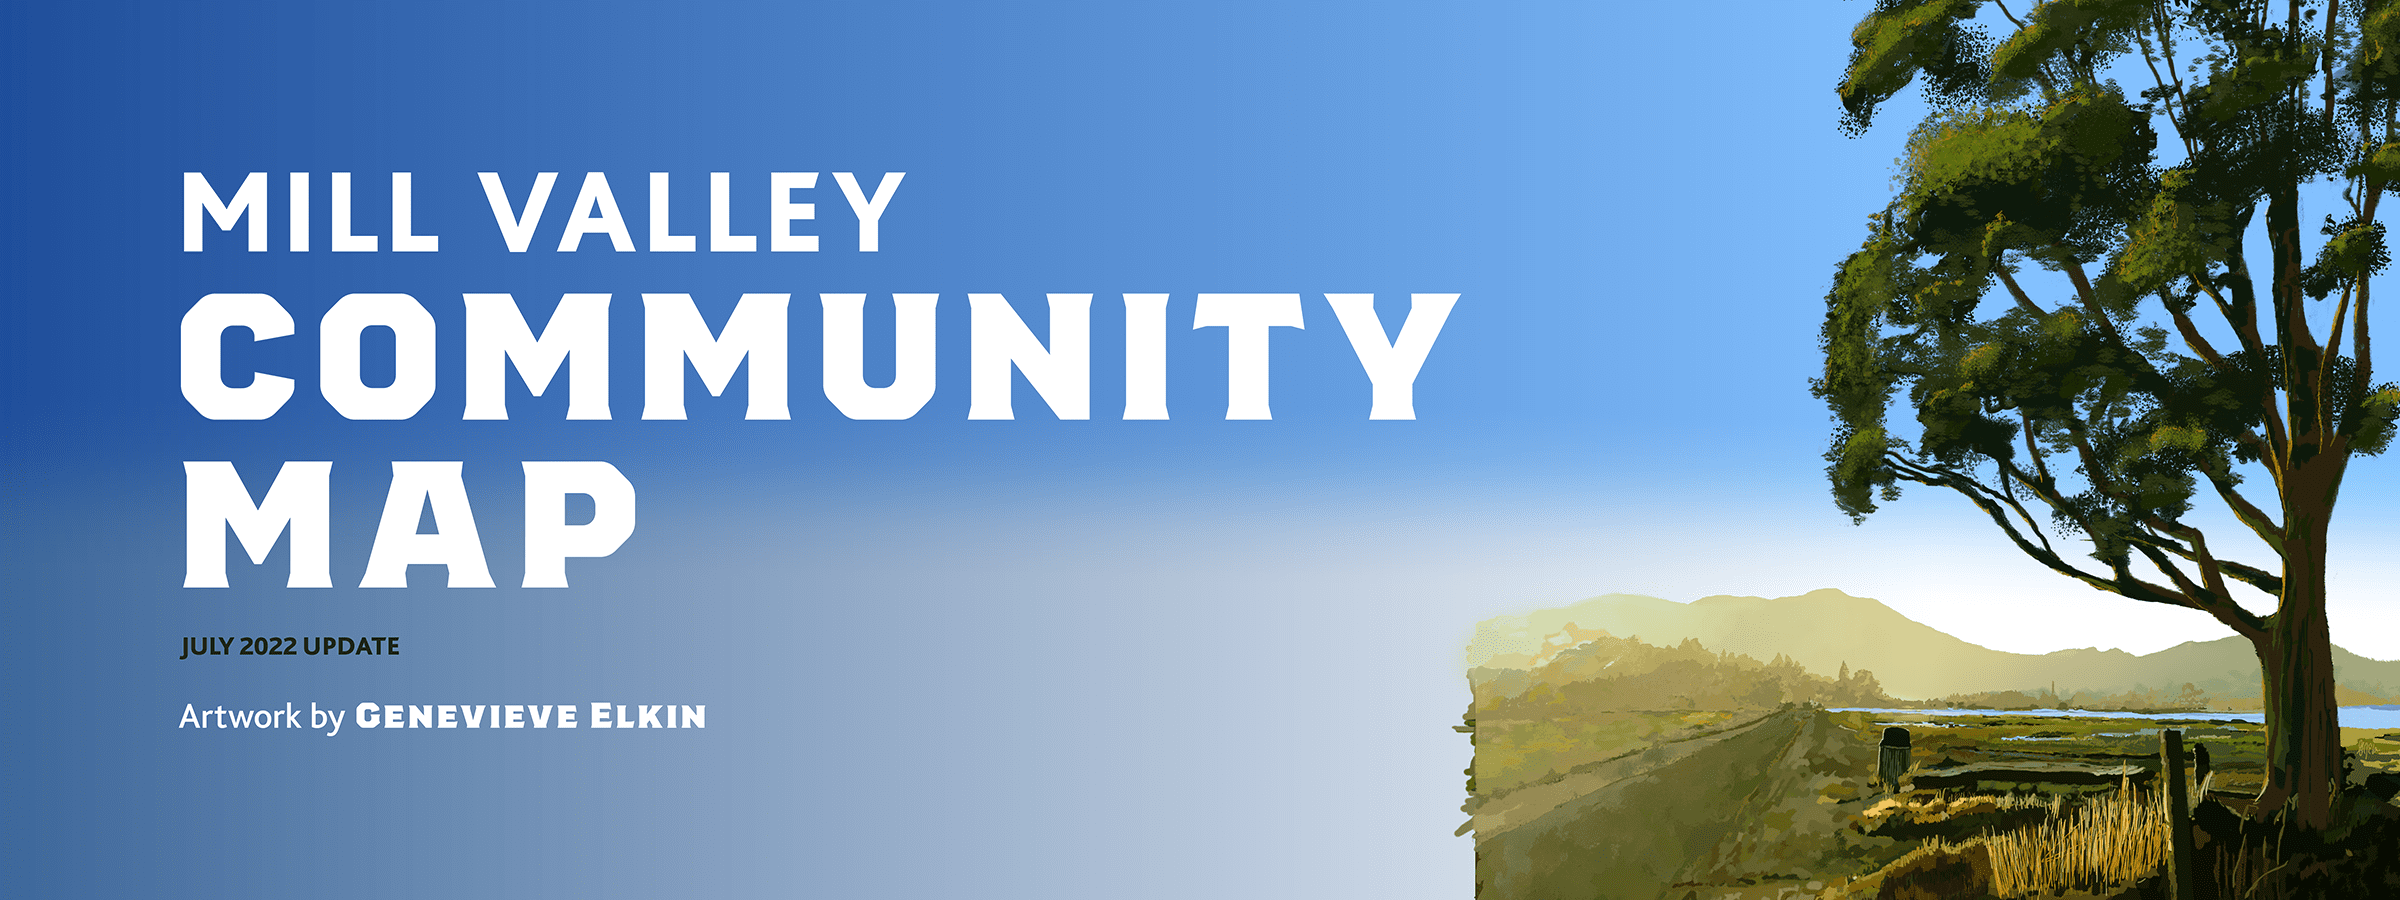 Enjoy Mill Valley Community Map July 2022 update